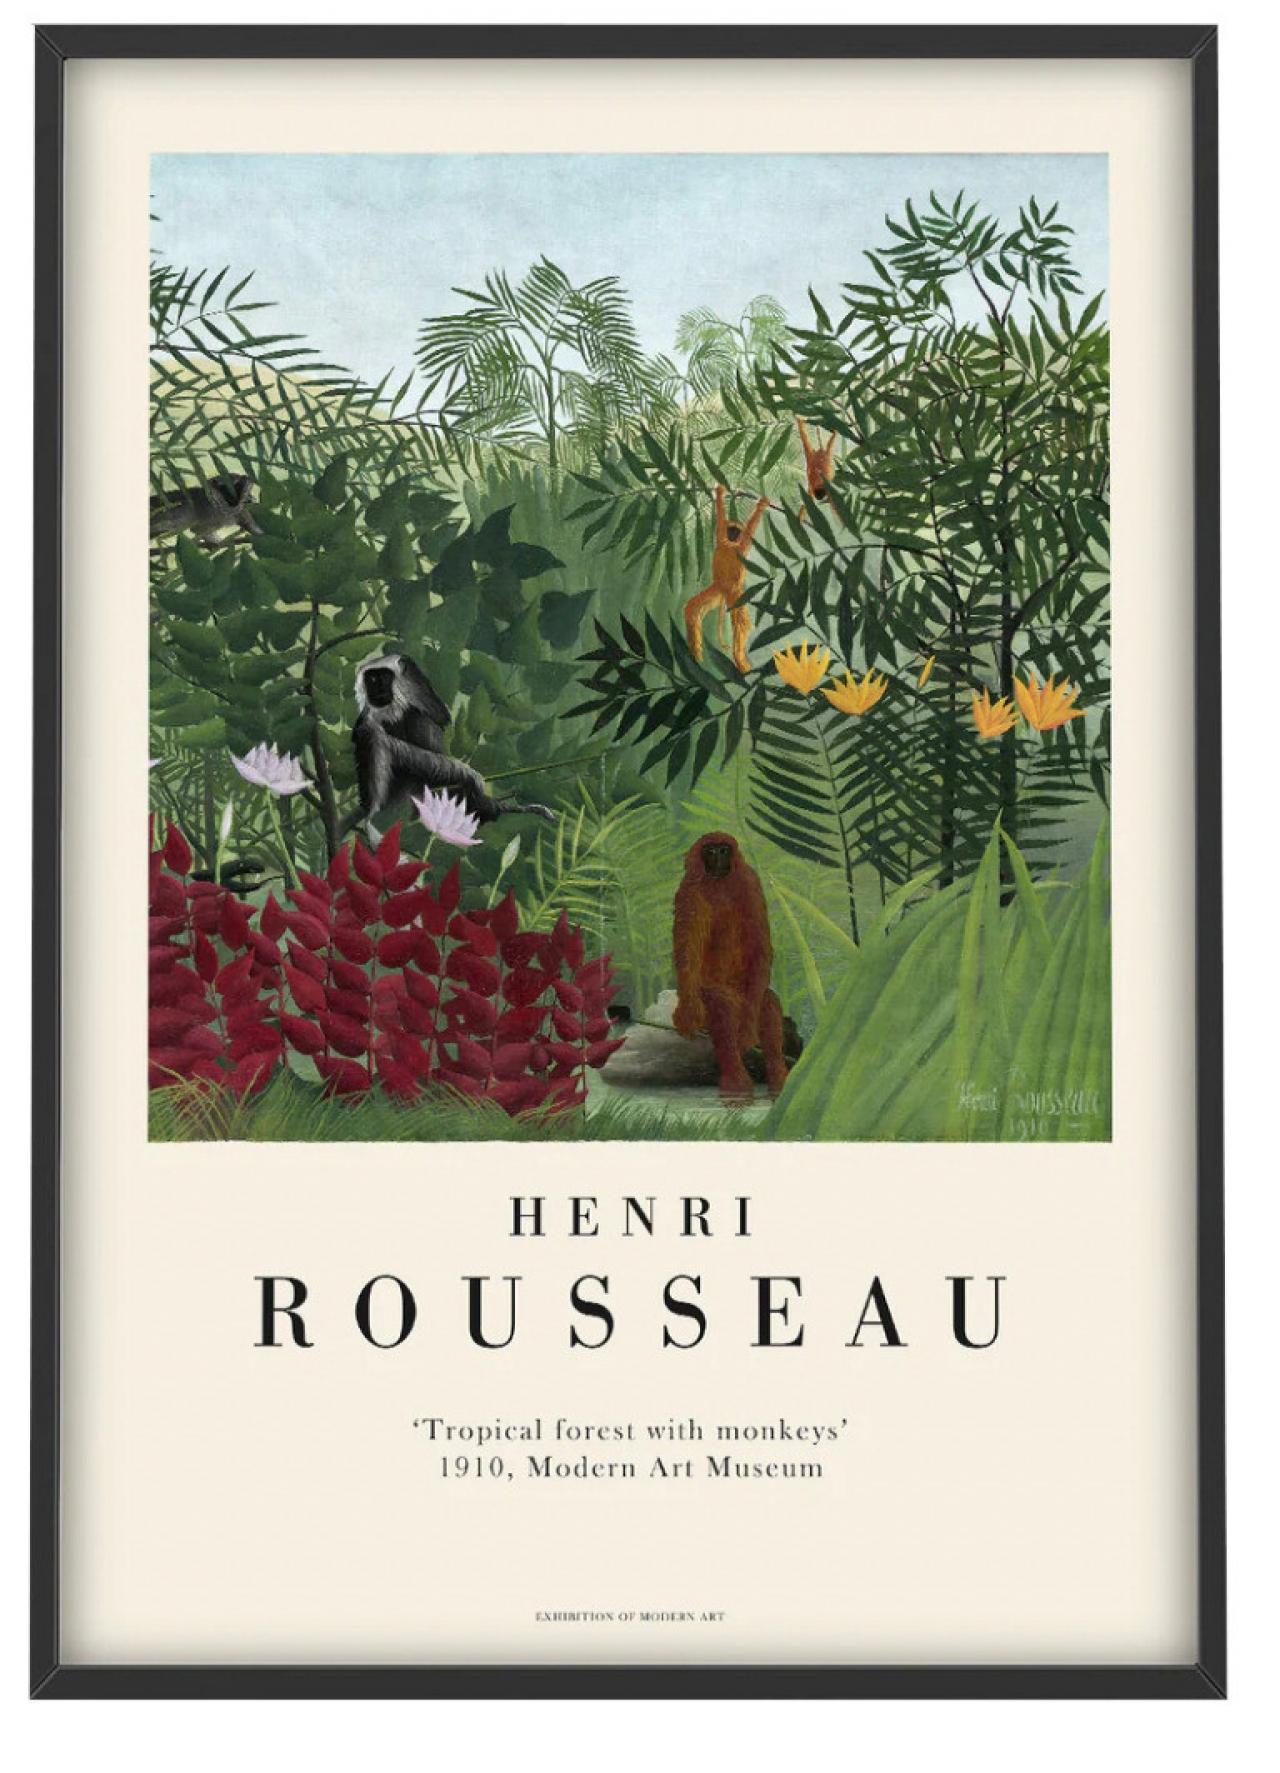 Print Henri Rousseau - € 45 - pstrstudio.